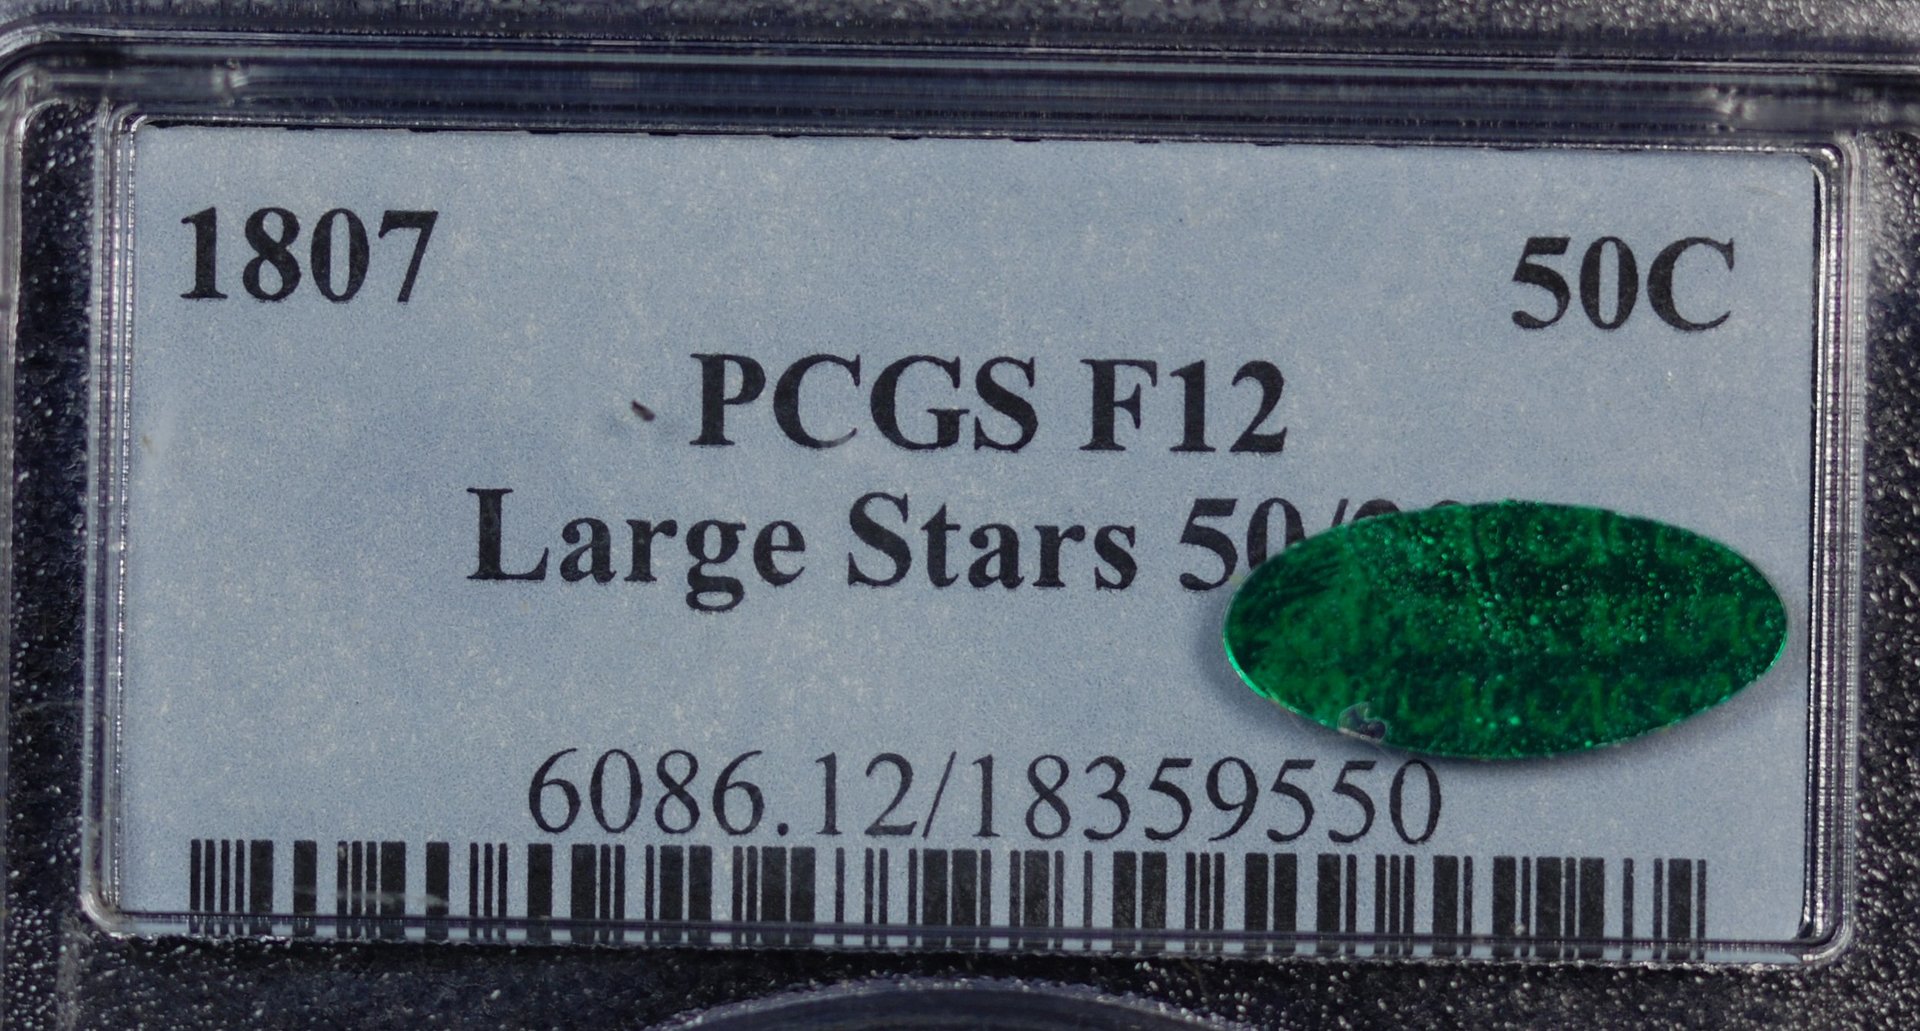 1807 large stars Label.jpg